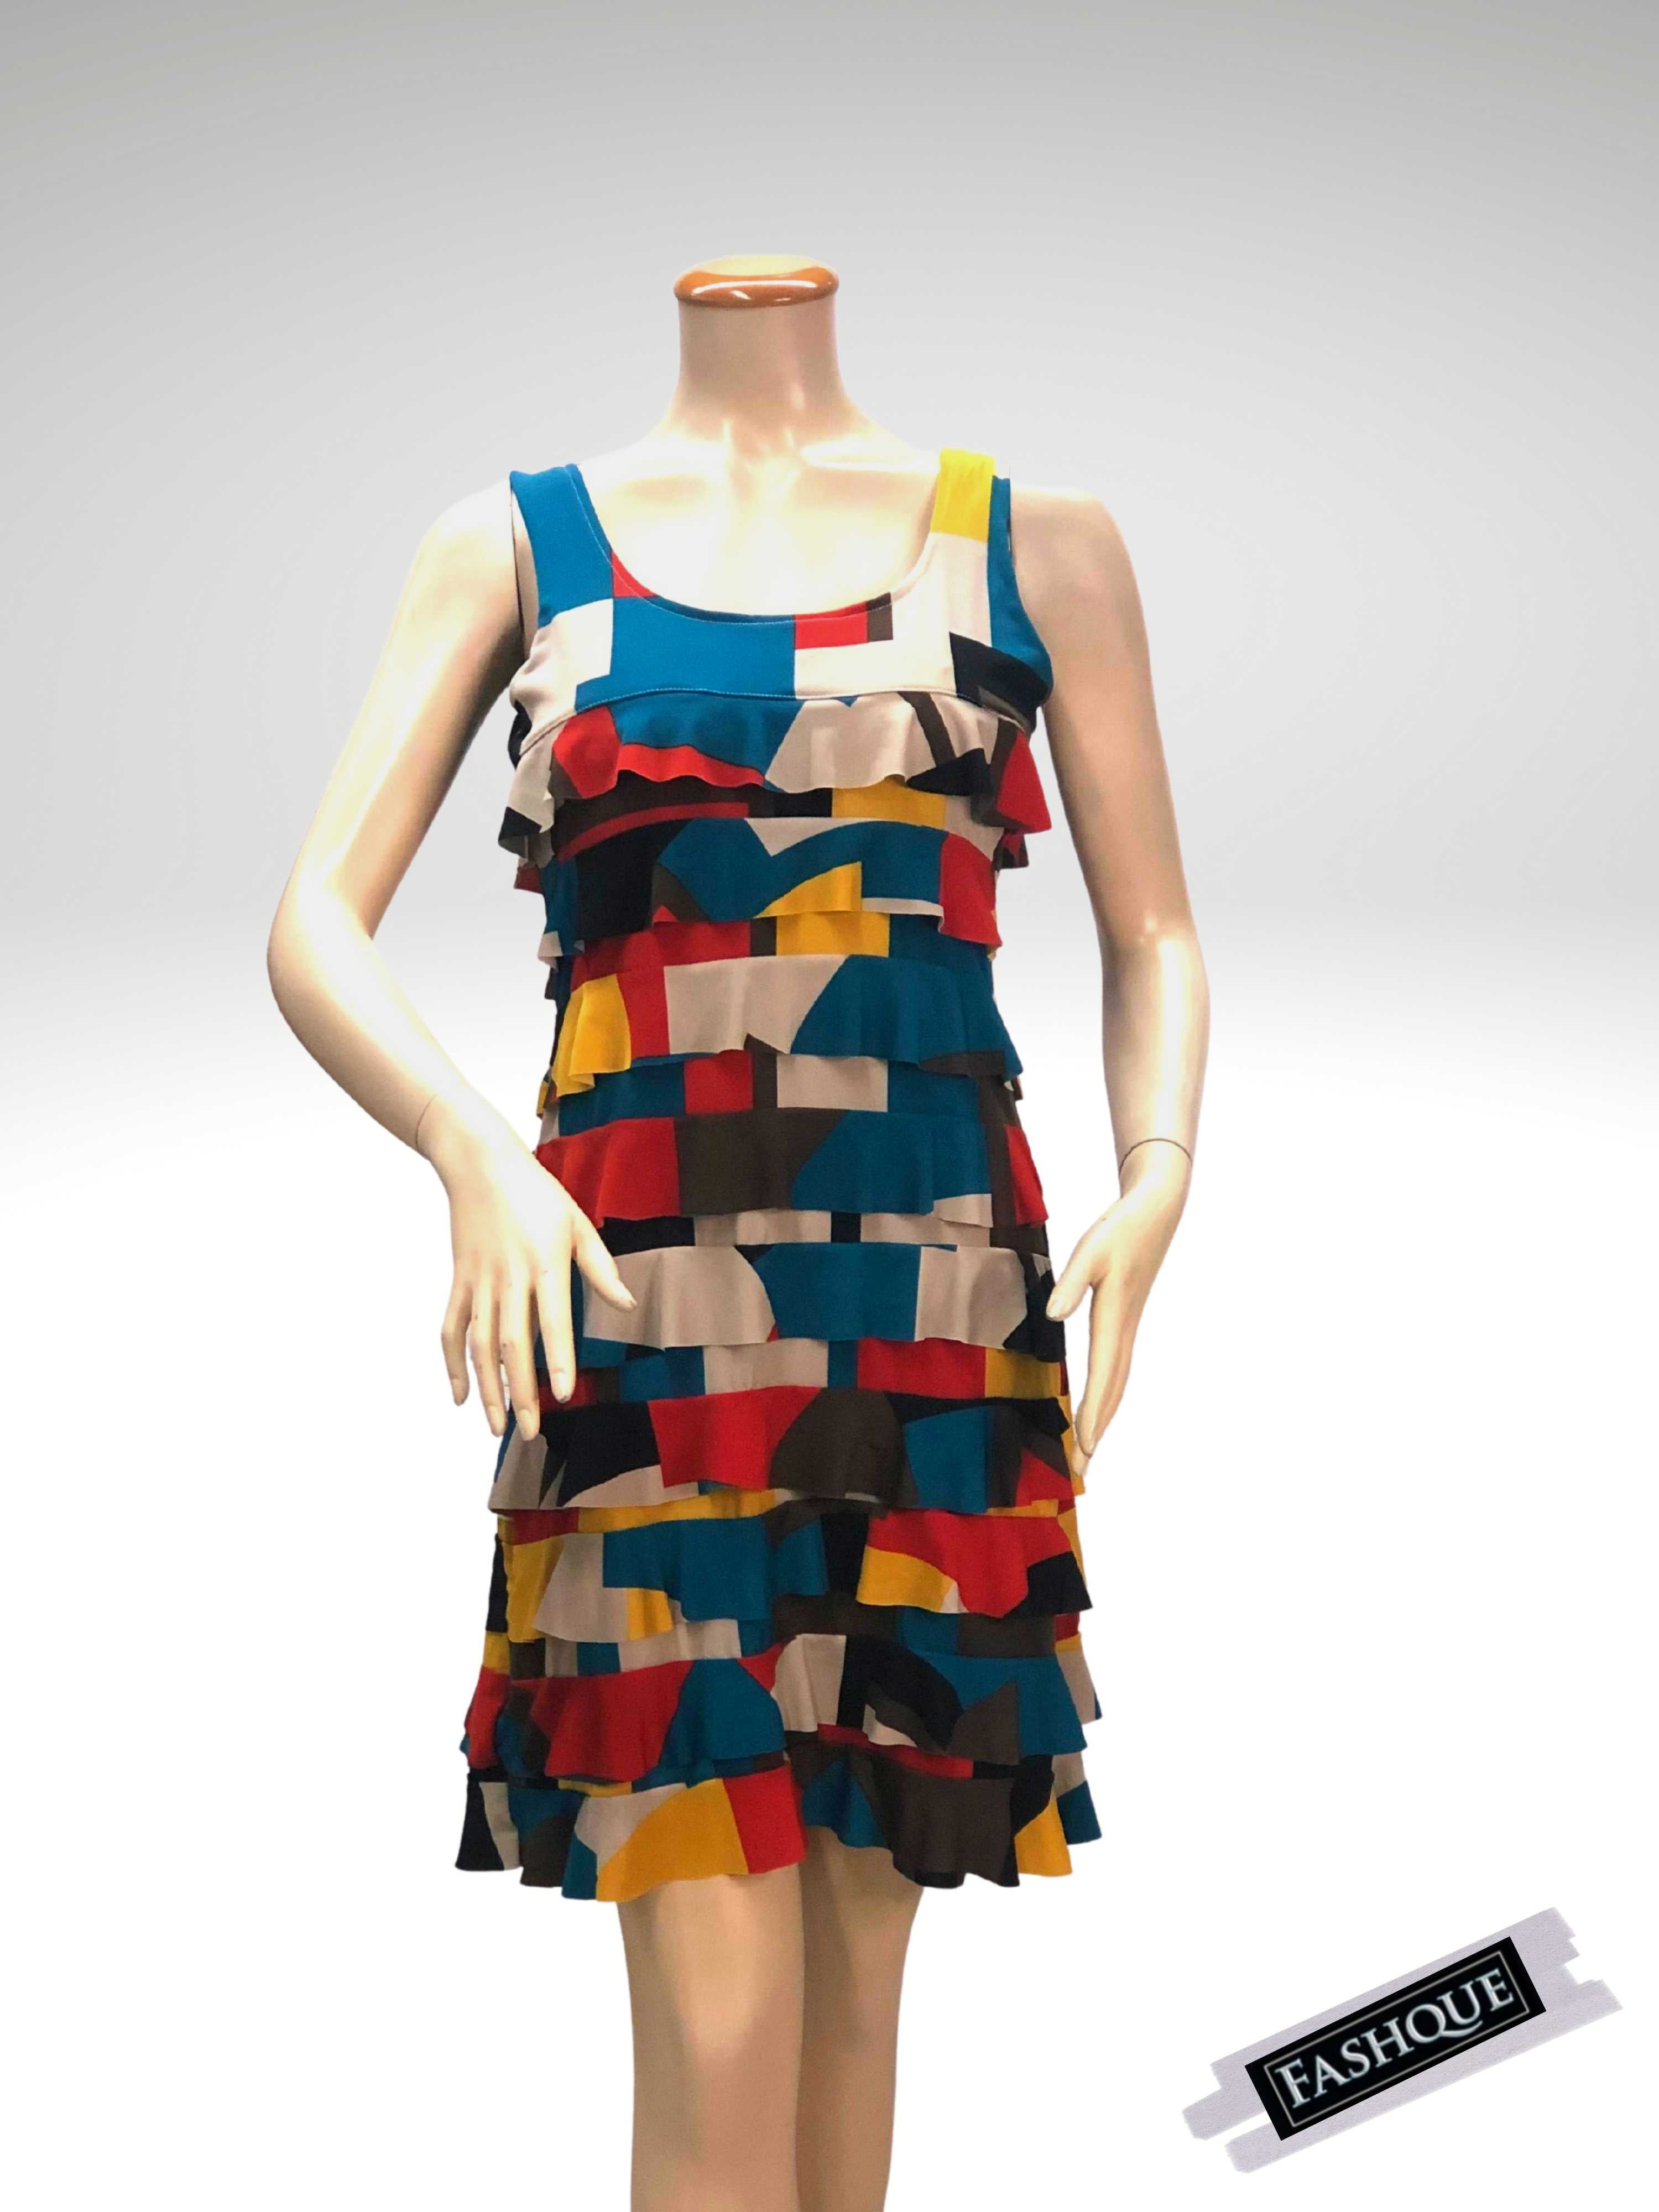 FASHQUE - CHACHA Ruffle Dress Sleeveless Knee length - SALE - D760